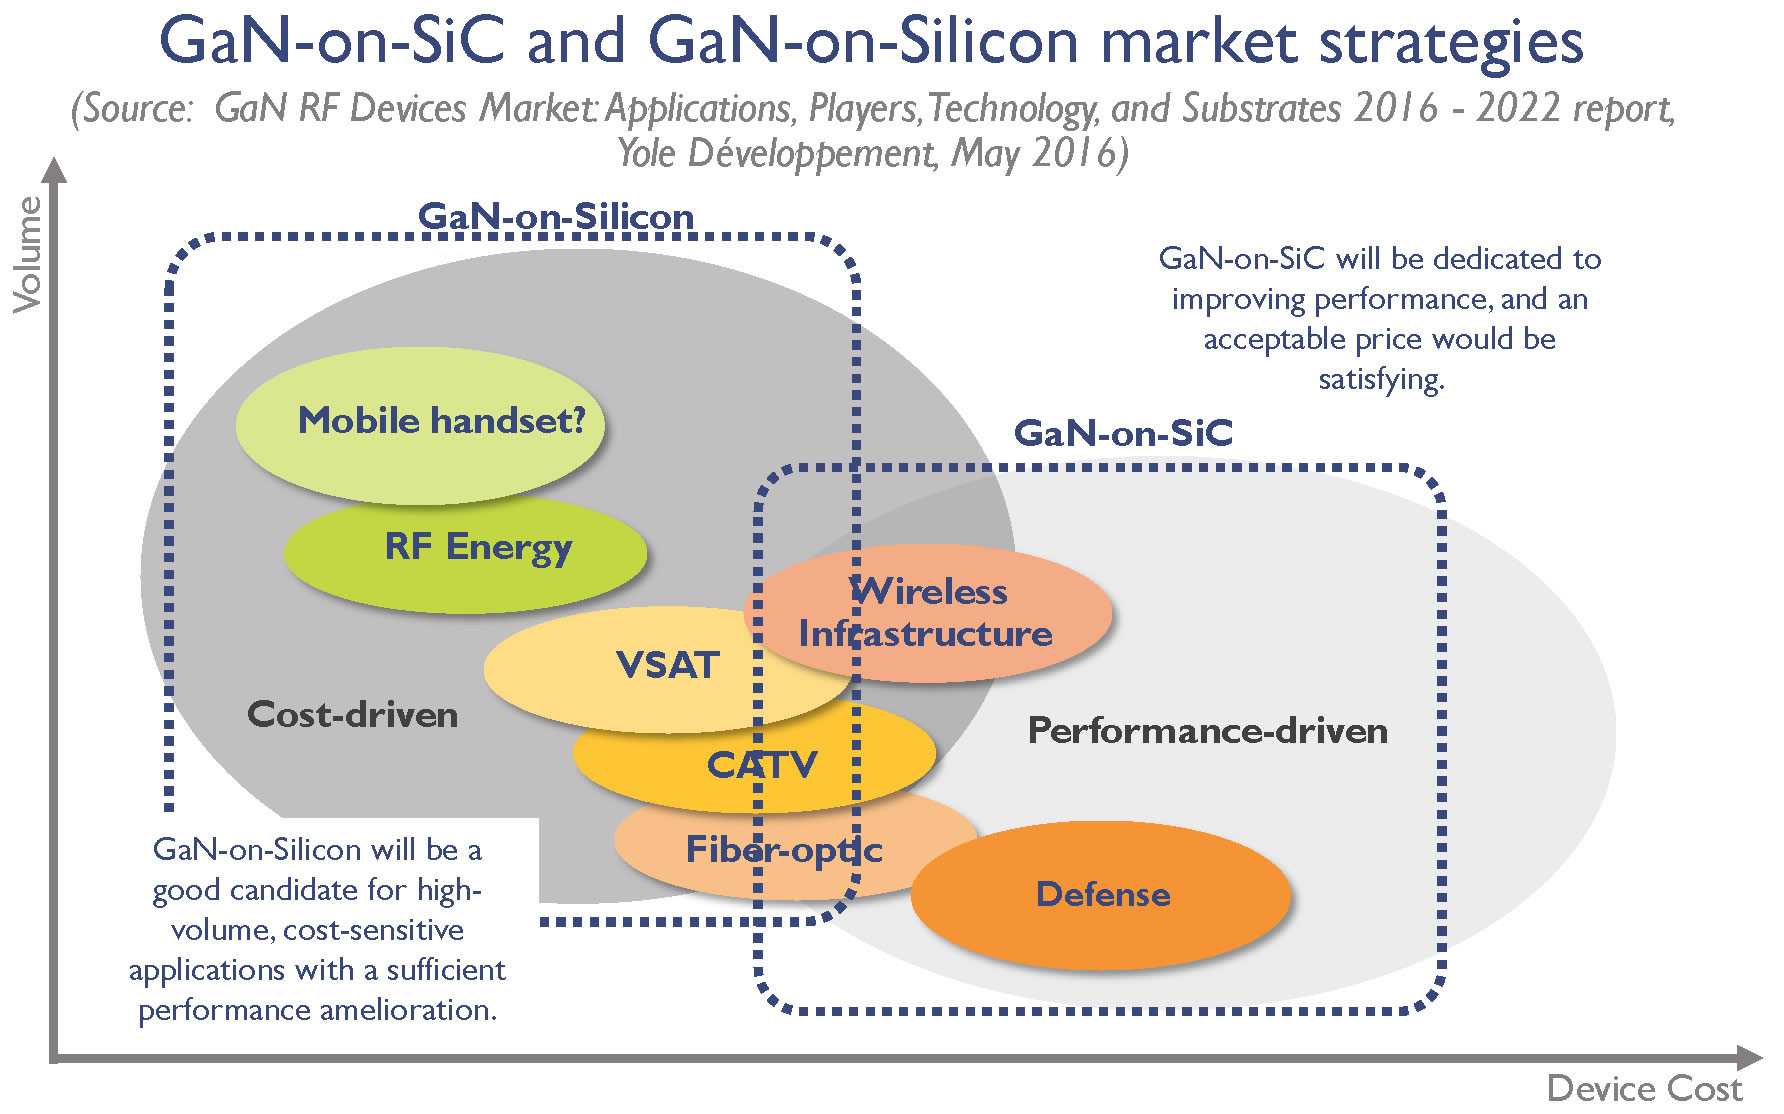 GaN-on-SiC and Gan-on-Si market strategies